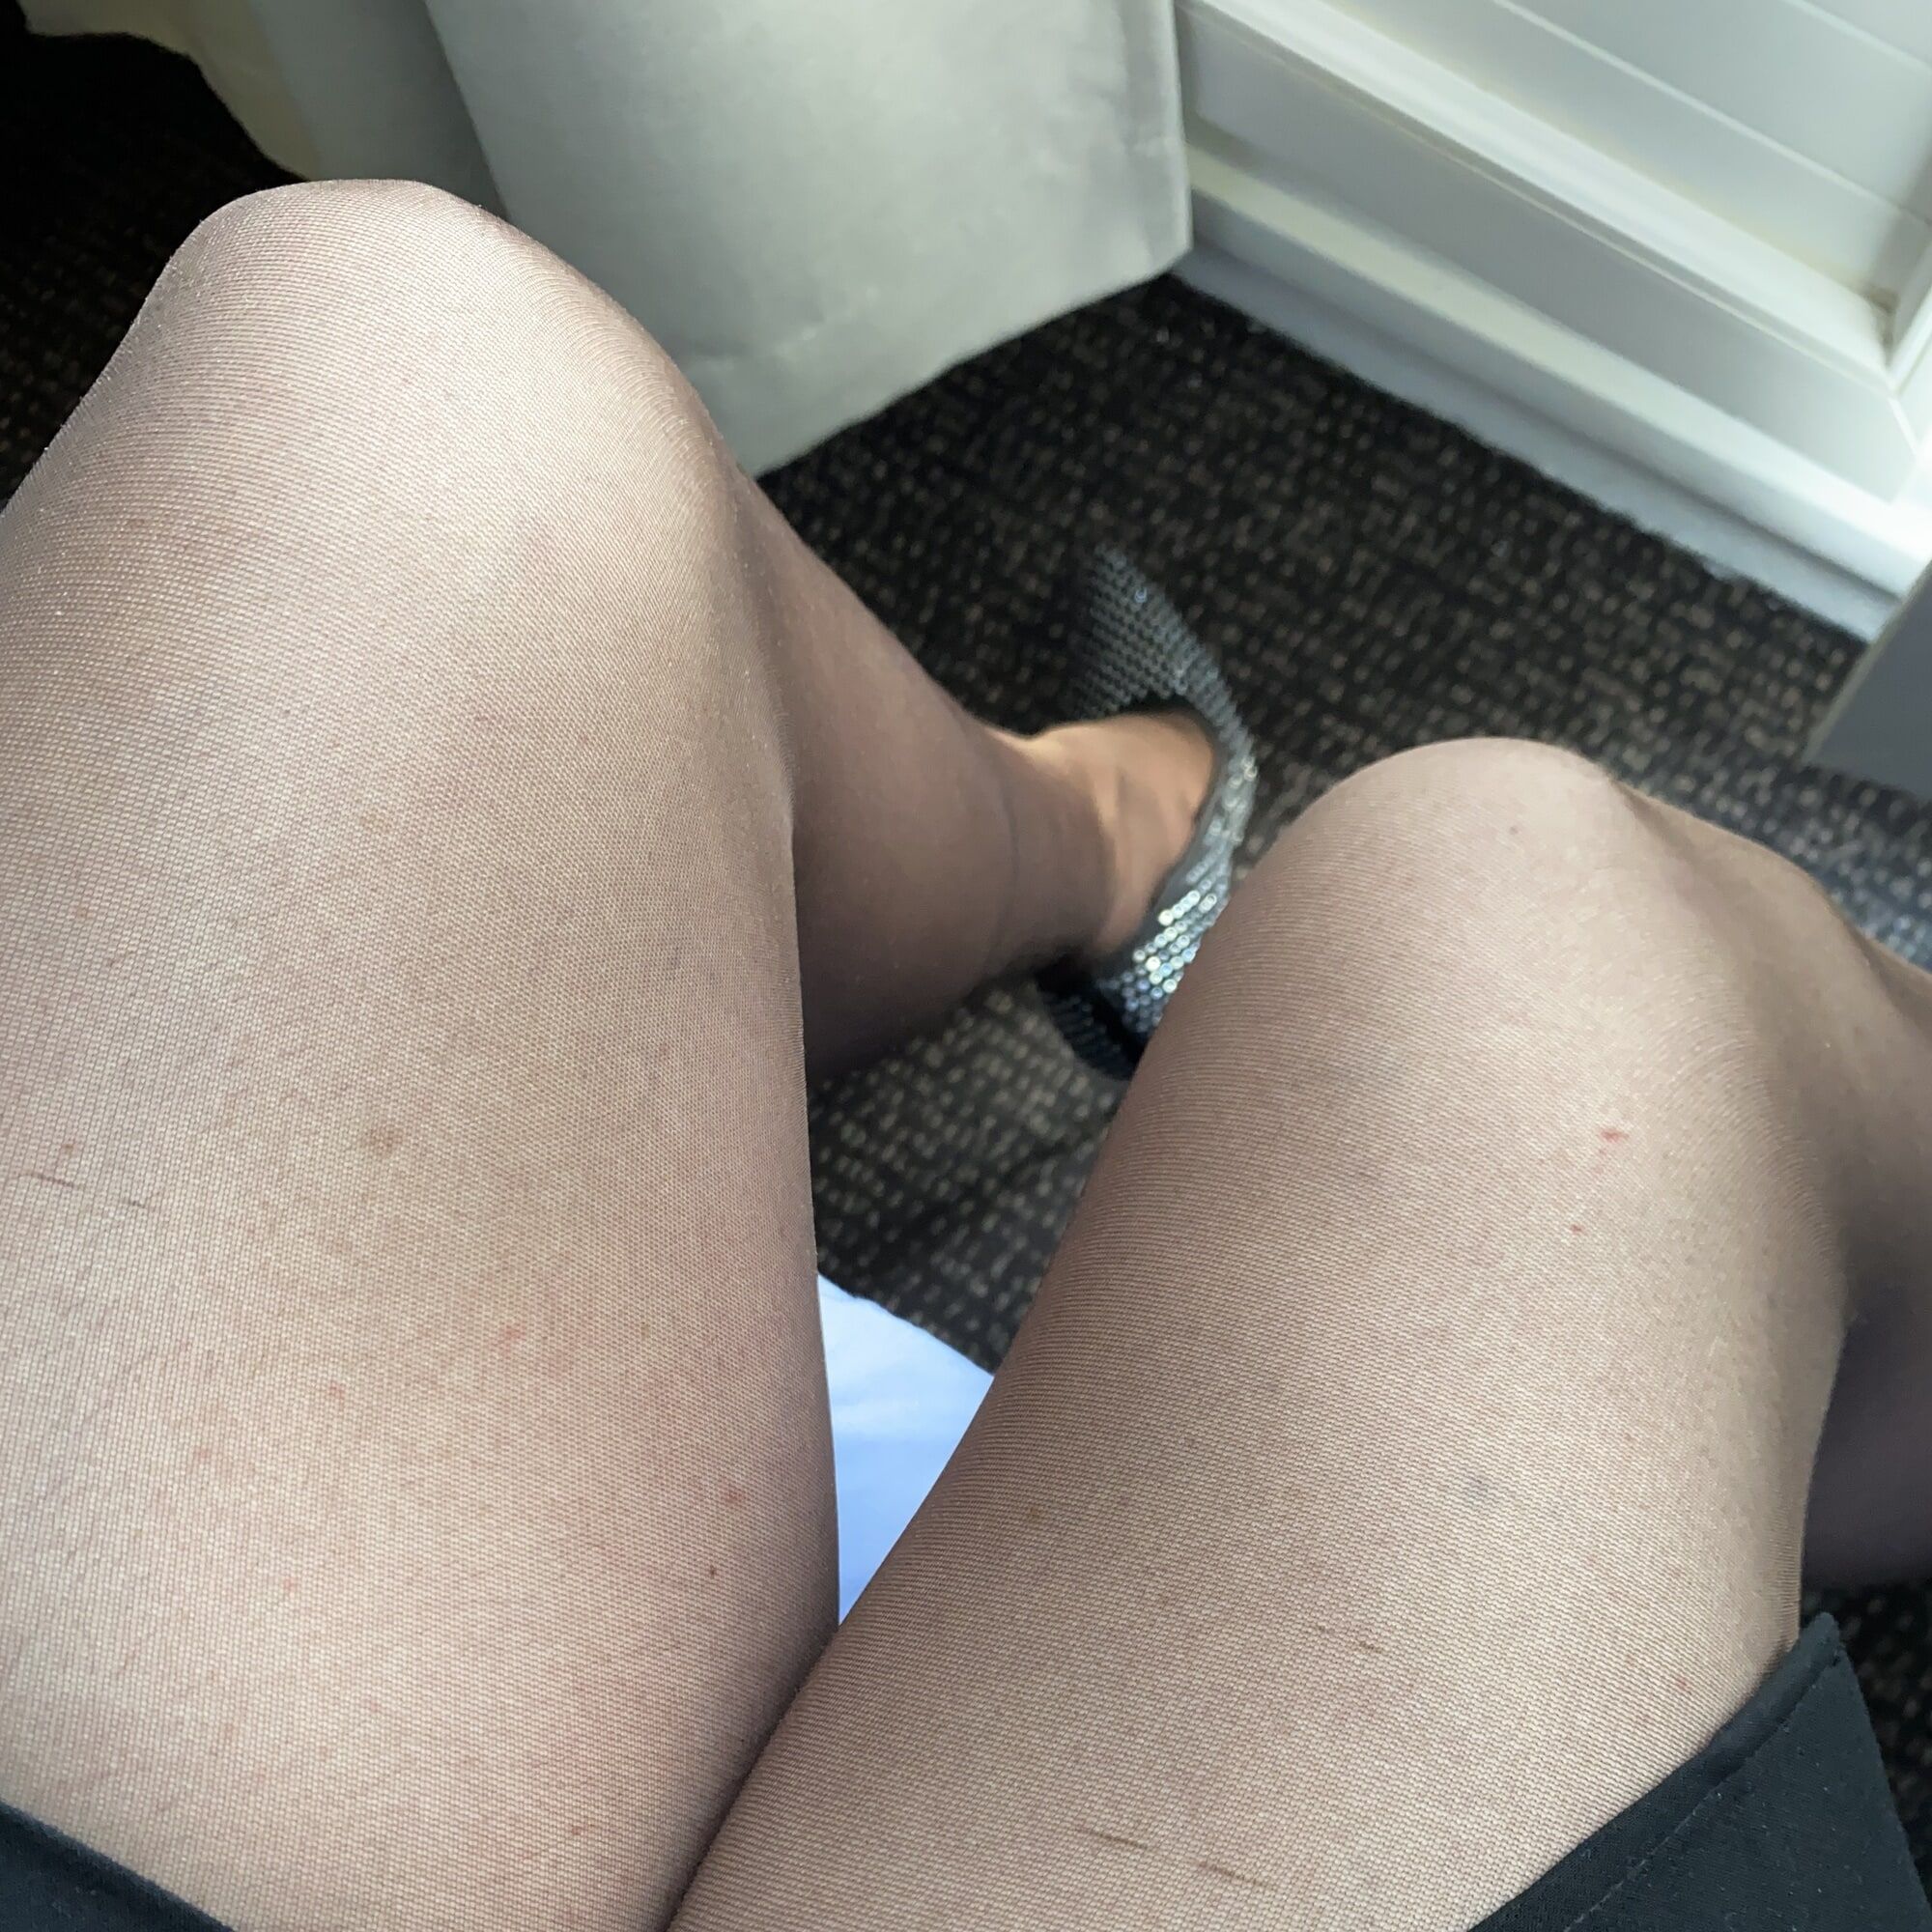 Sexy legs & pantyhose 